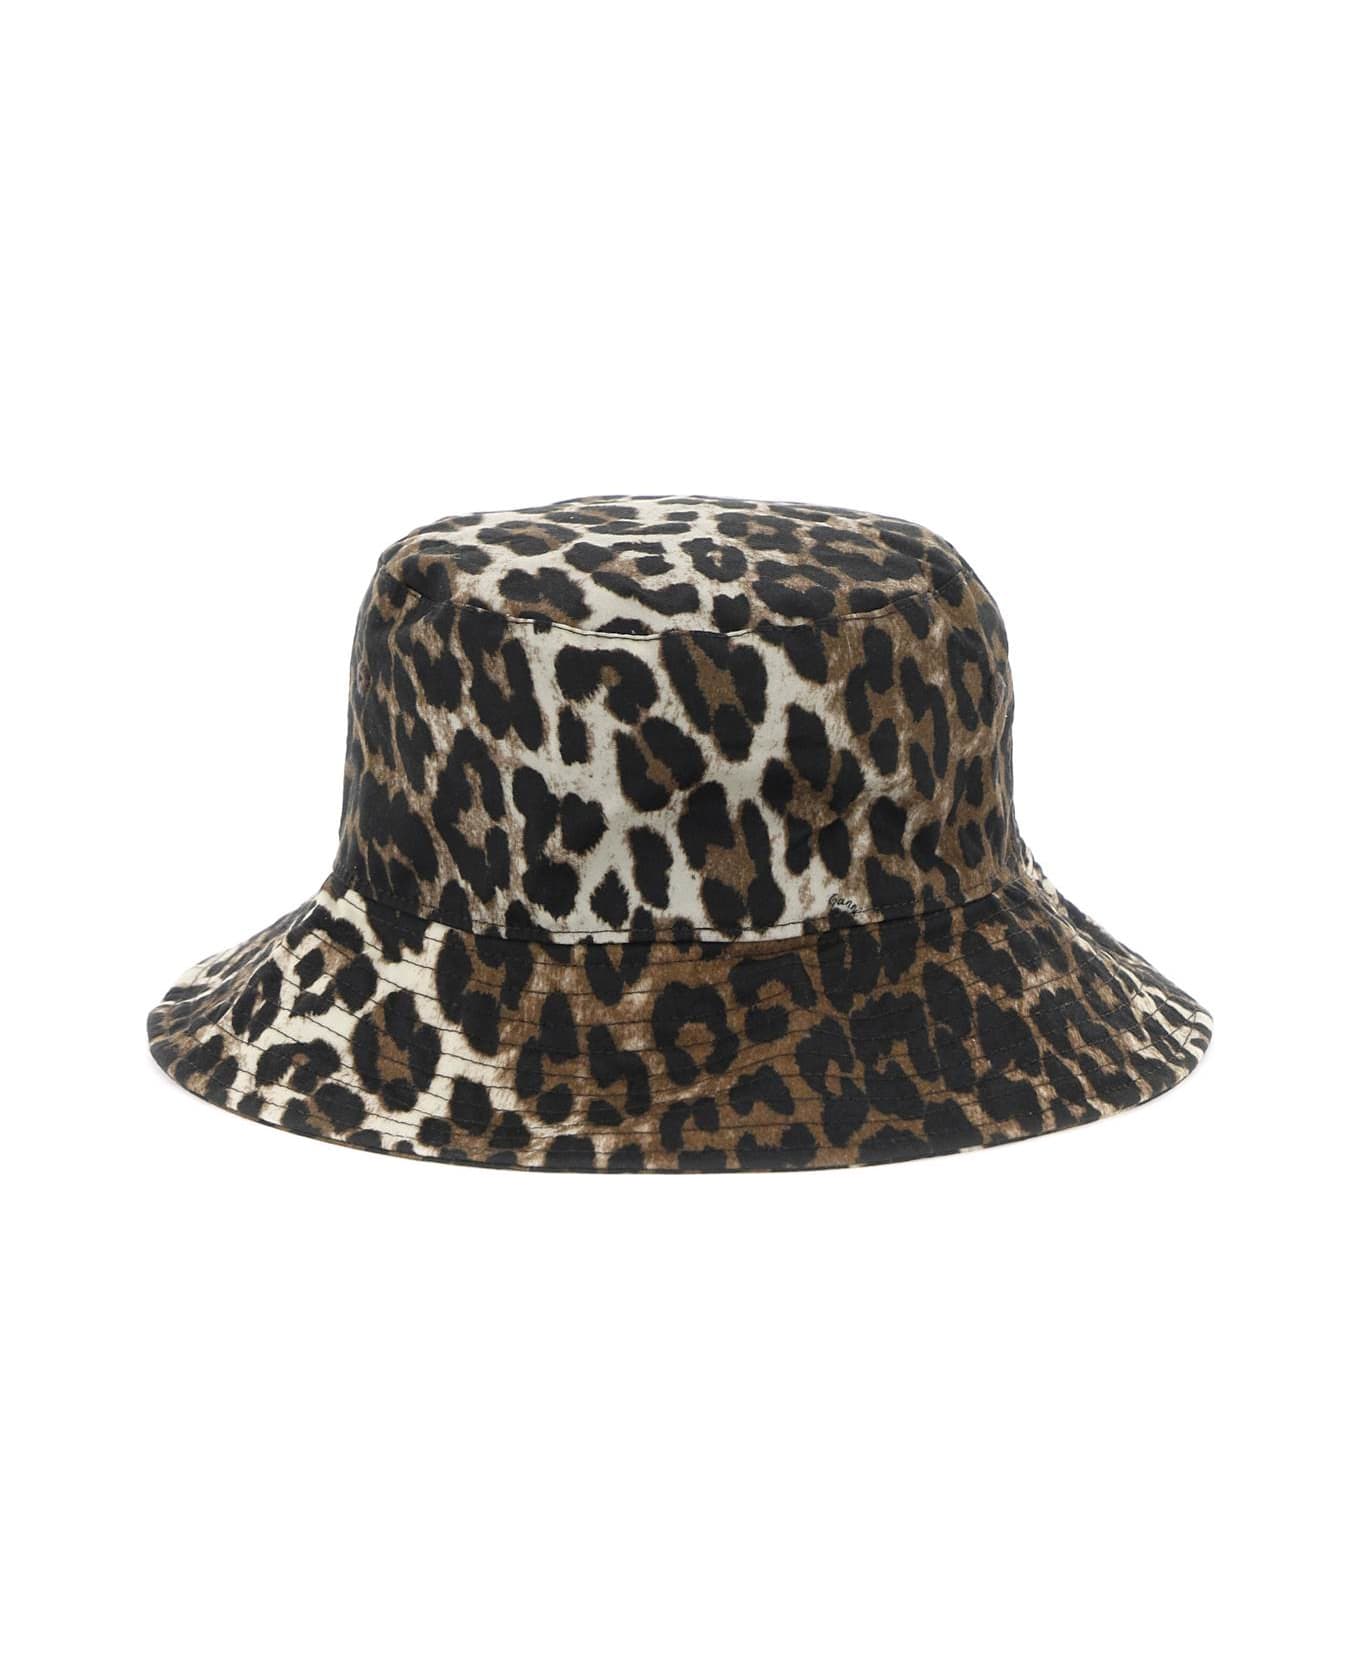 Barbour Waxed Leopard Bucket Hat - LEOPARD PRINT (Brown)